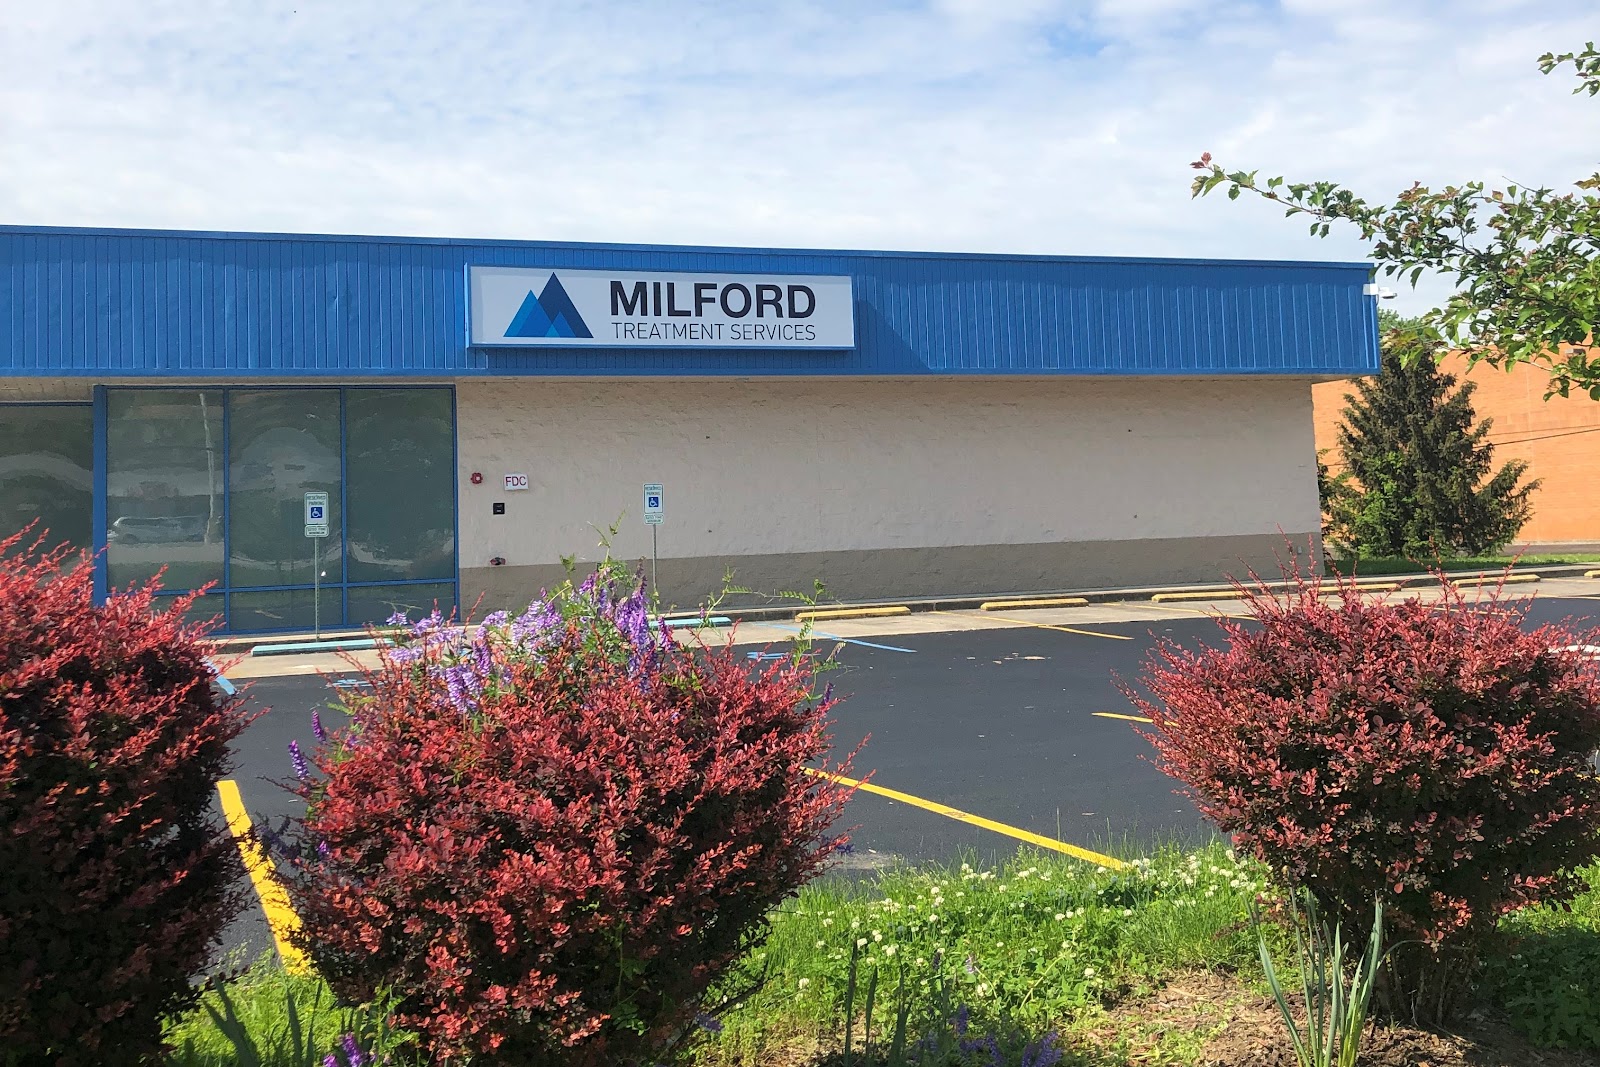 Pinnacle Treatment Centers - Milford Treatment Services